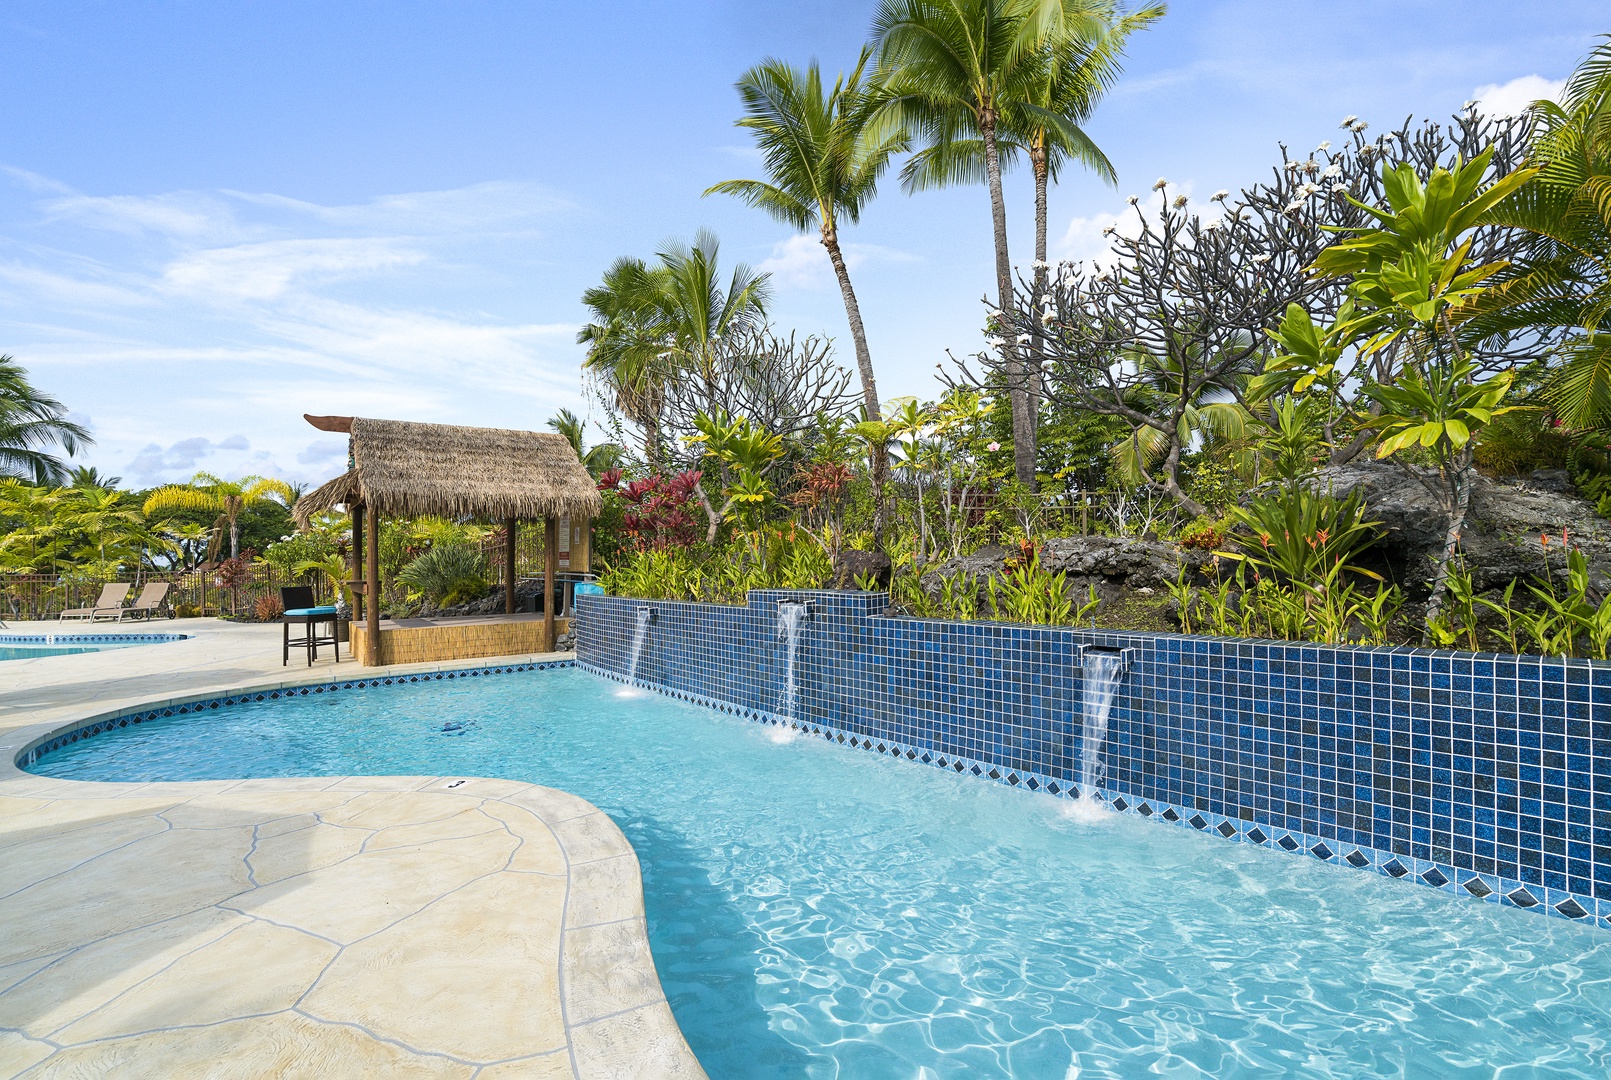 Kailua Kona Vacation Rentals, Keauhou Resort 125 - Keauhou Resort Pool